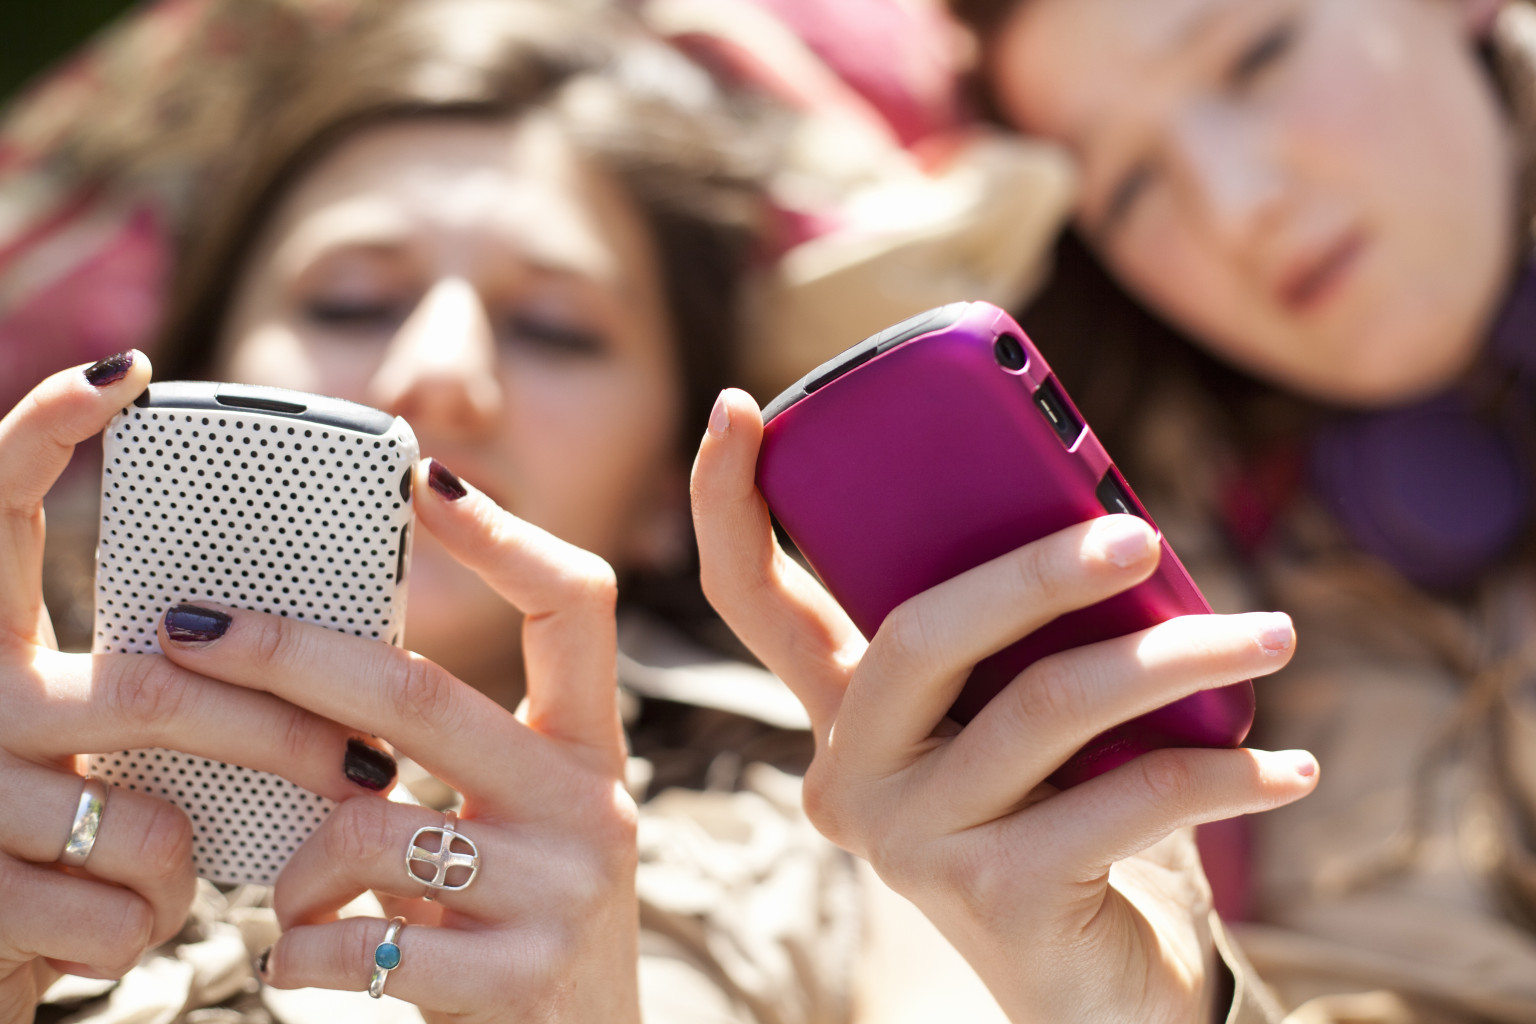 Facebook Usage Among Teens Set to Drop in U.S., EMarketer Says